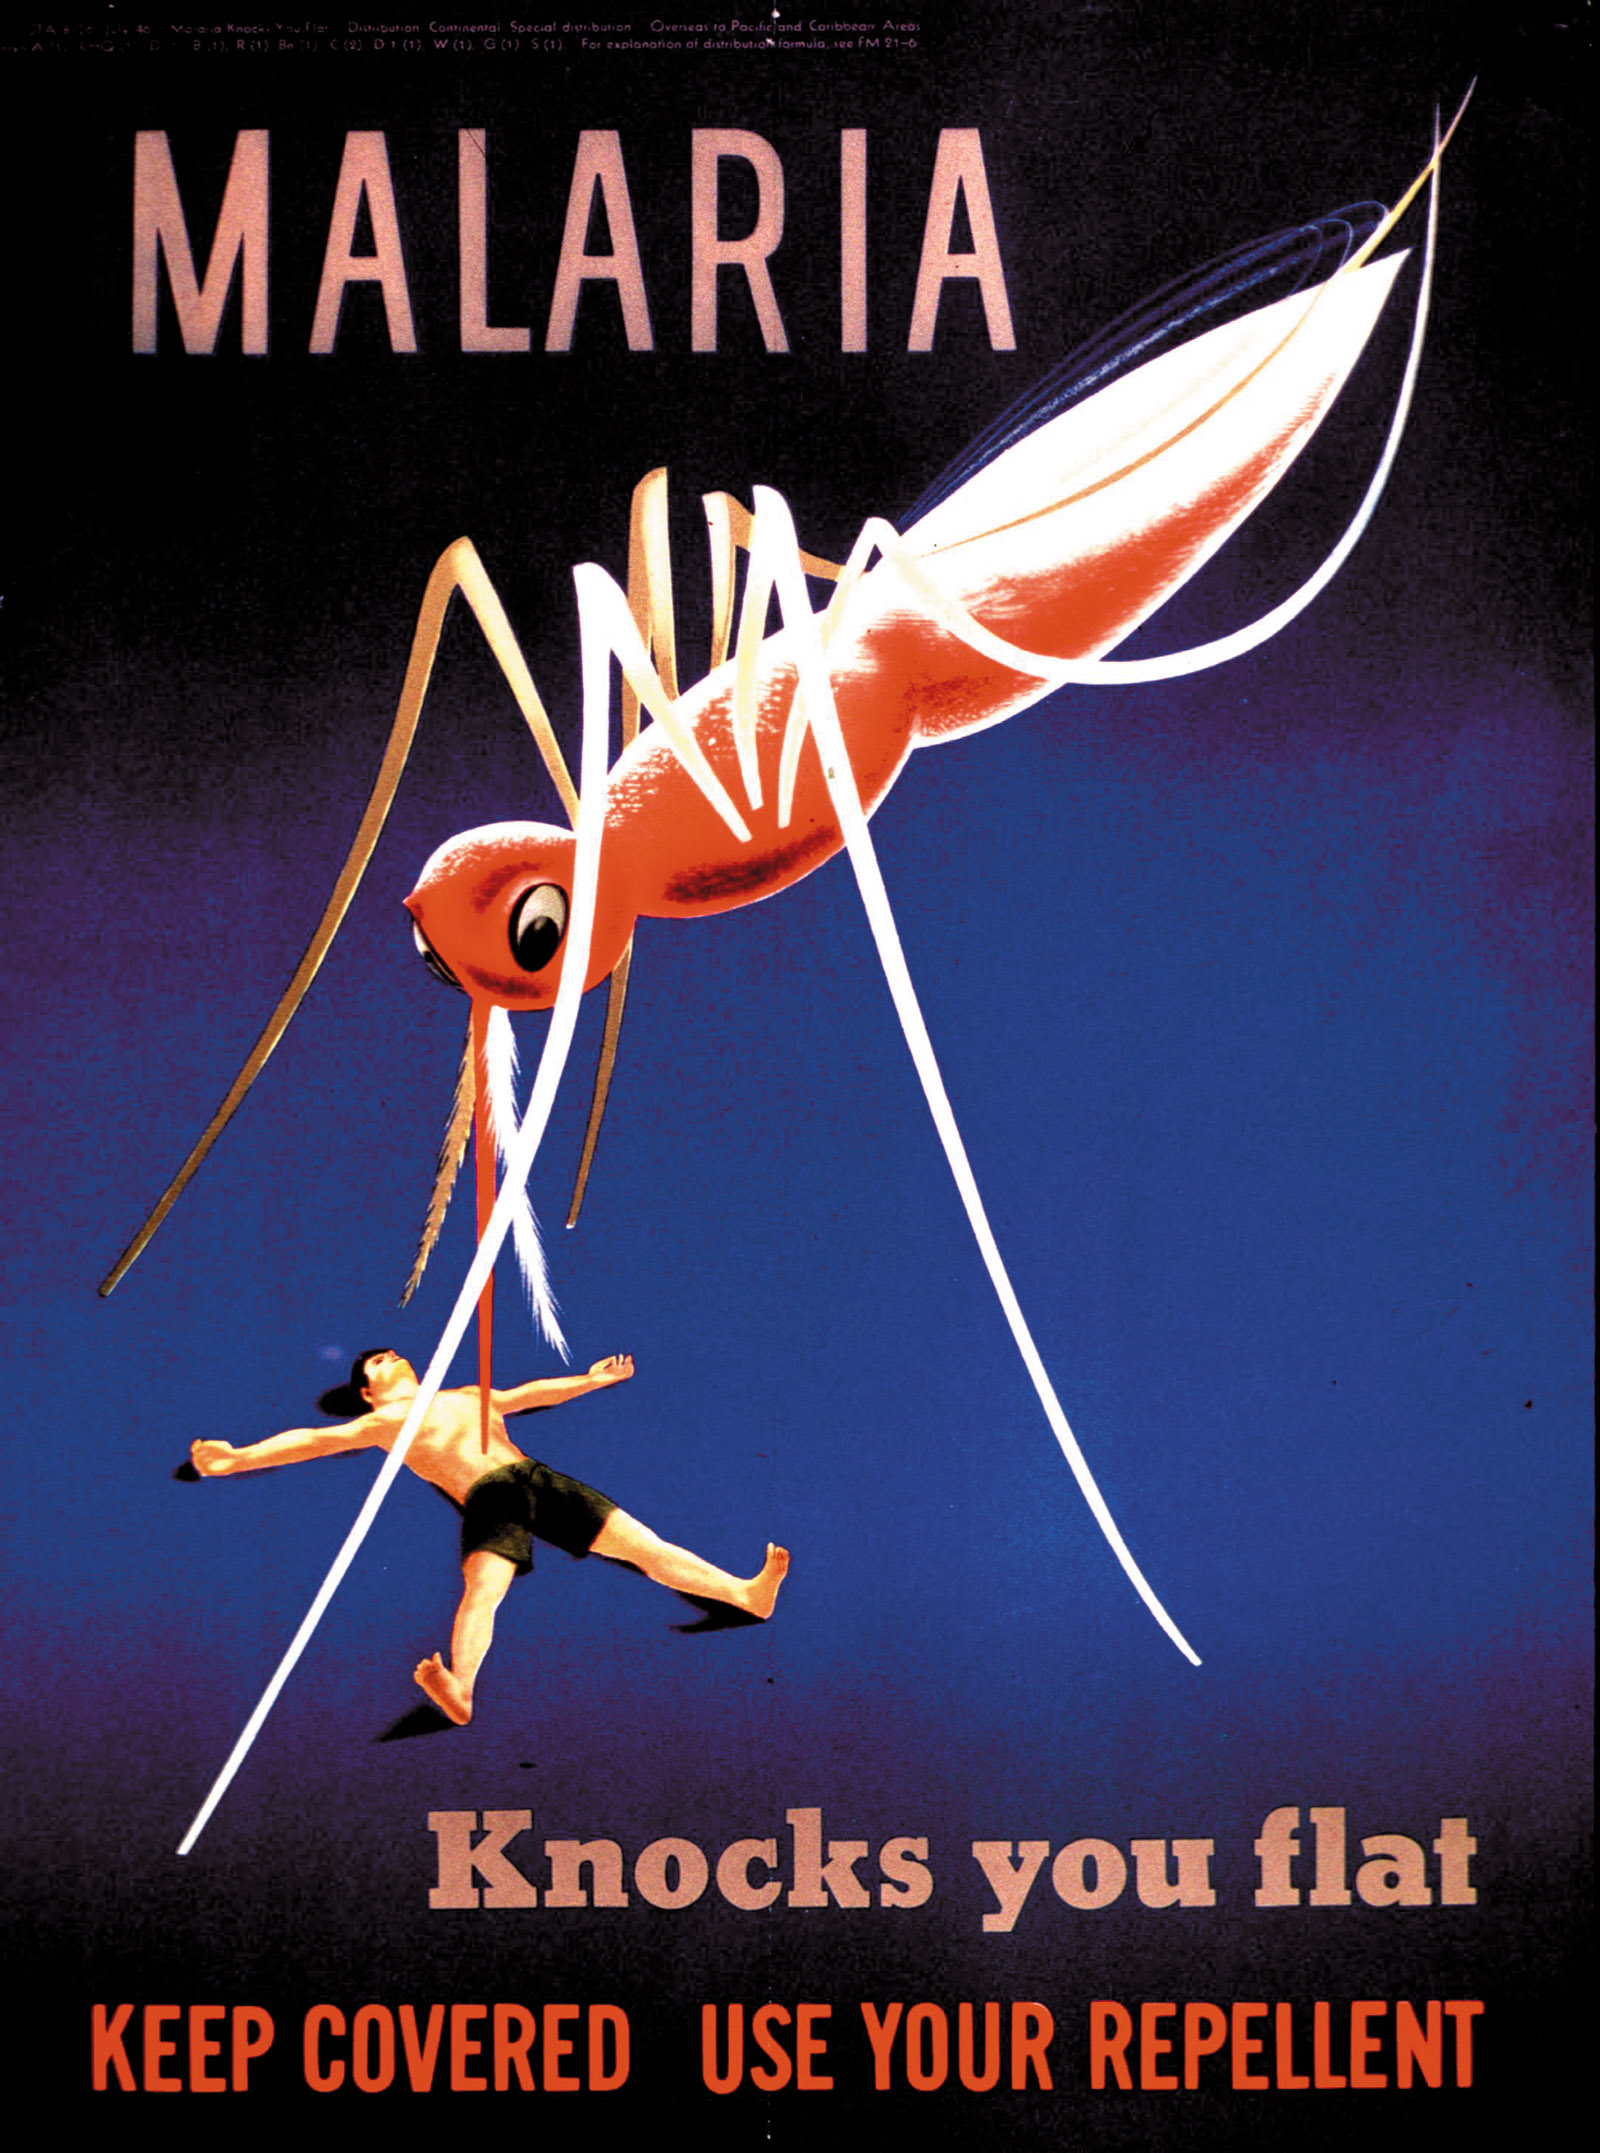 A poster for a US public health campaign urging precautions against malaria, circa 1920